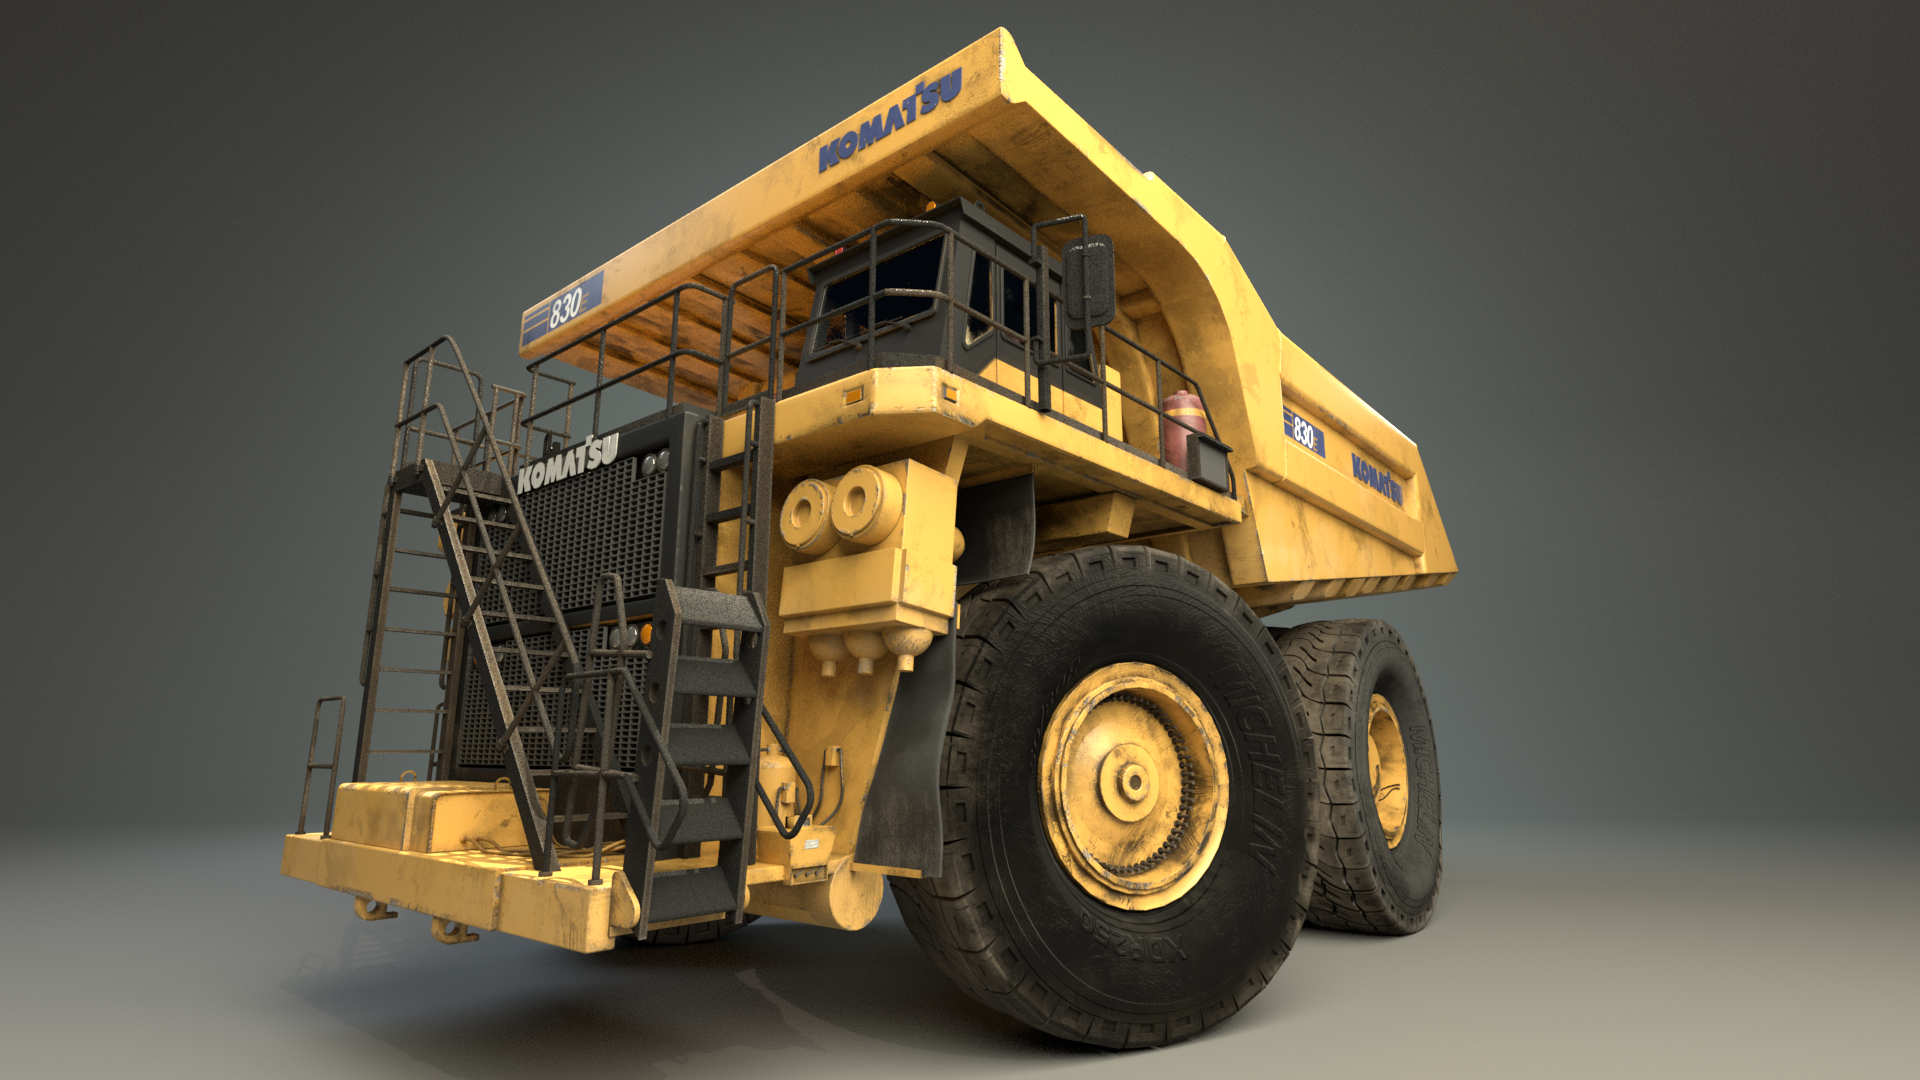 Komatsu 830e-5 Mining Truck | Nathan Huseth